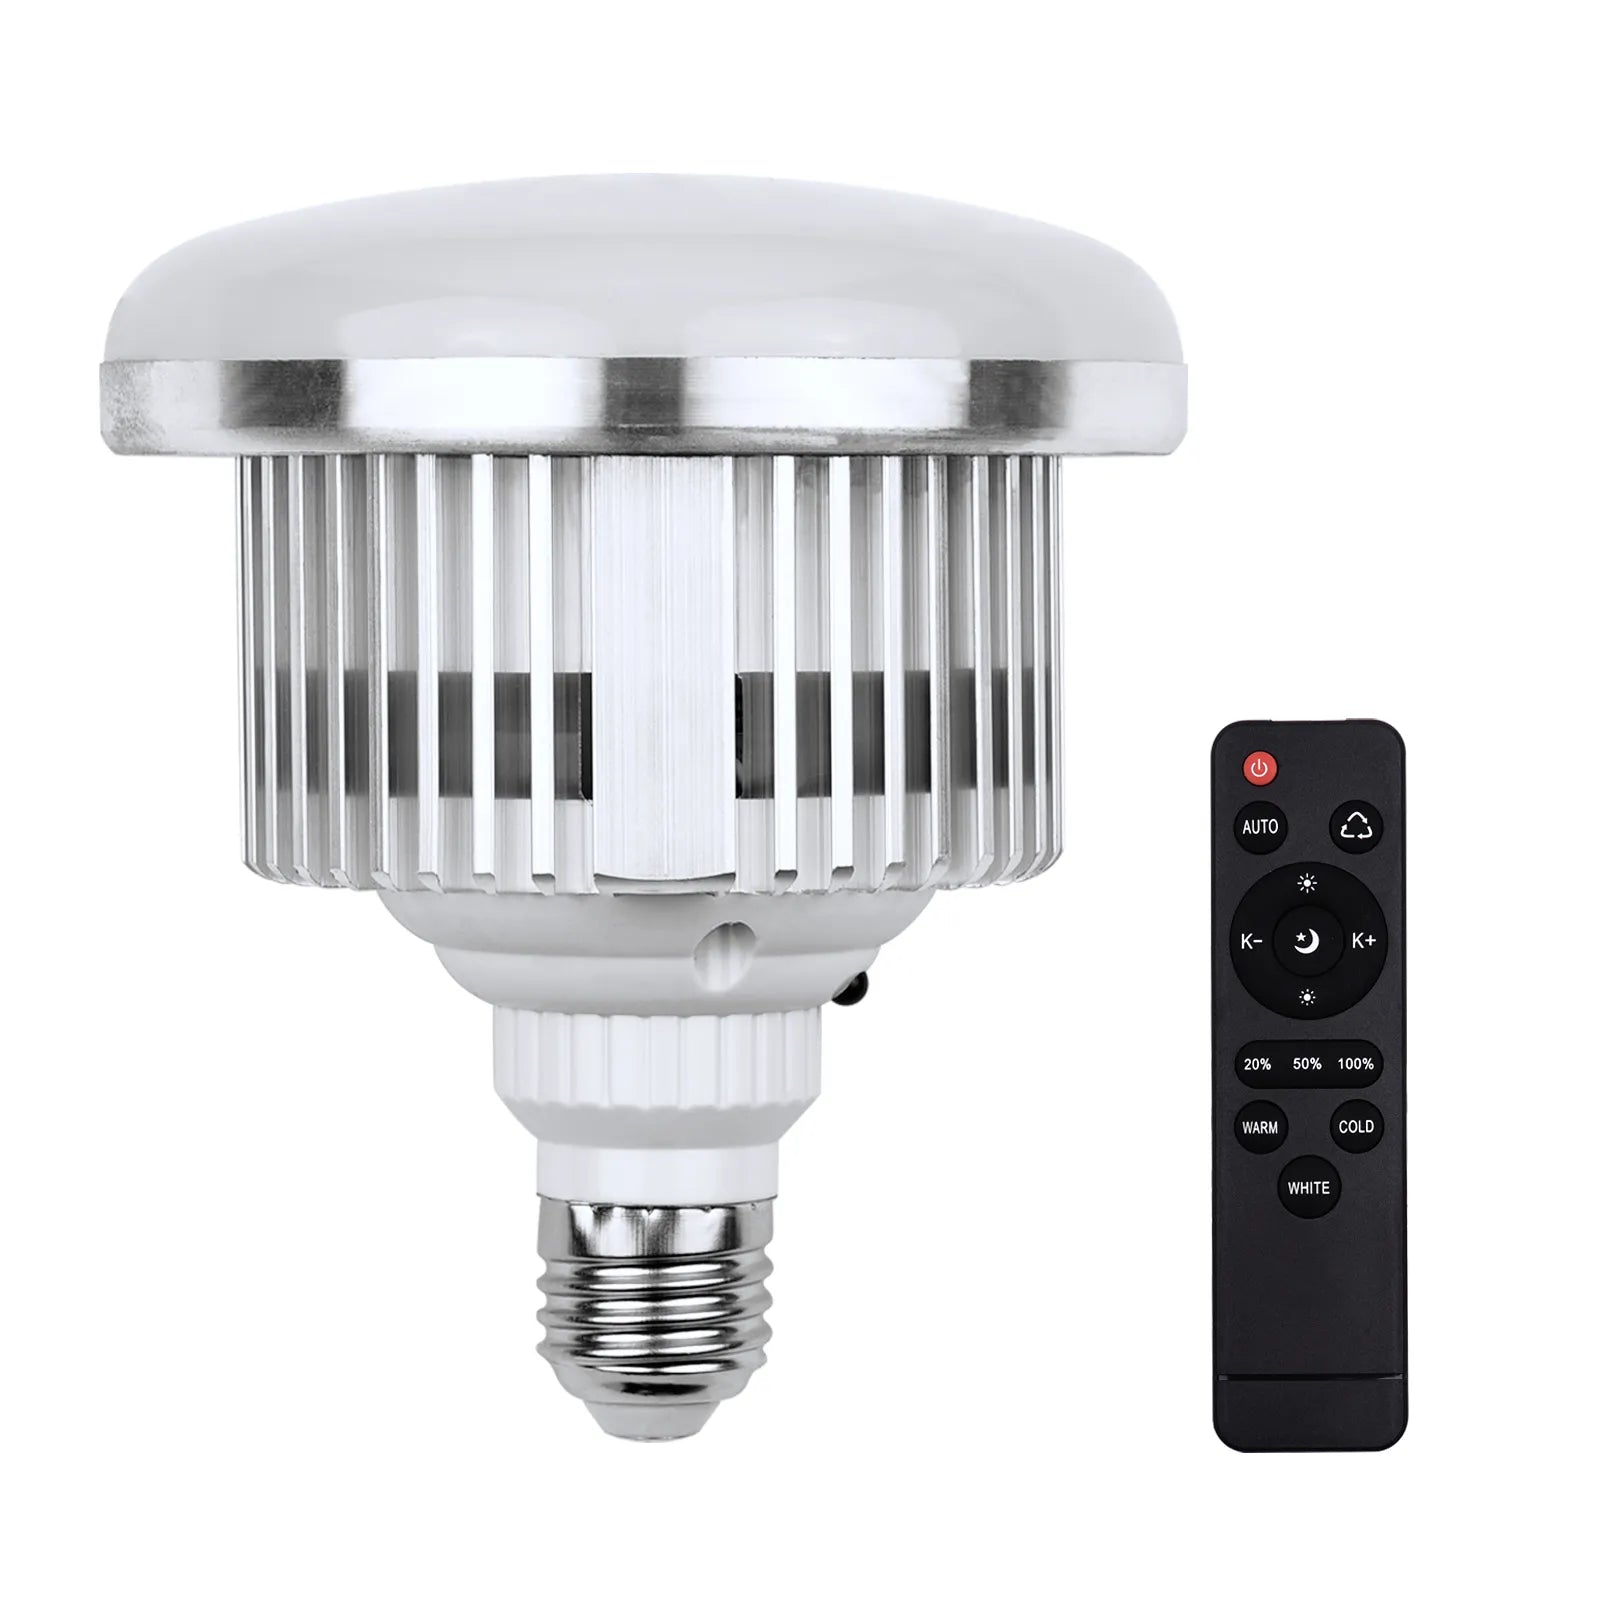 Andoer 85W LED Light Bulb 3000K-6500K Photography Lamp Bulb Energy-saving E27 Mount Remote Control for Photography Studio Home